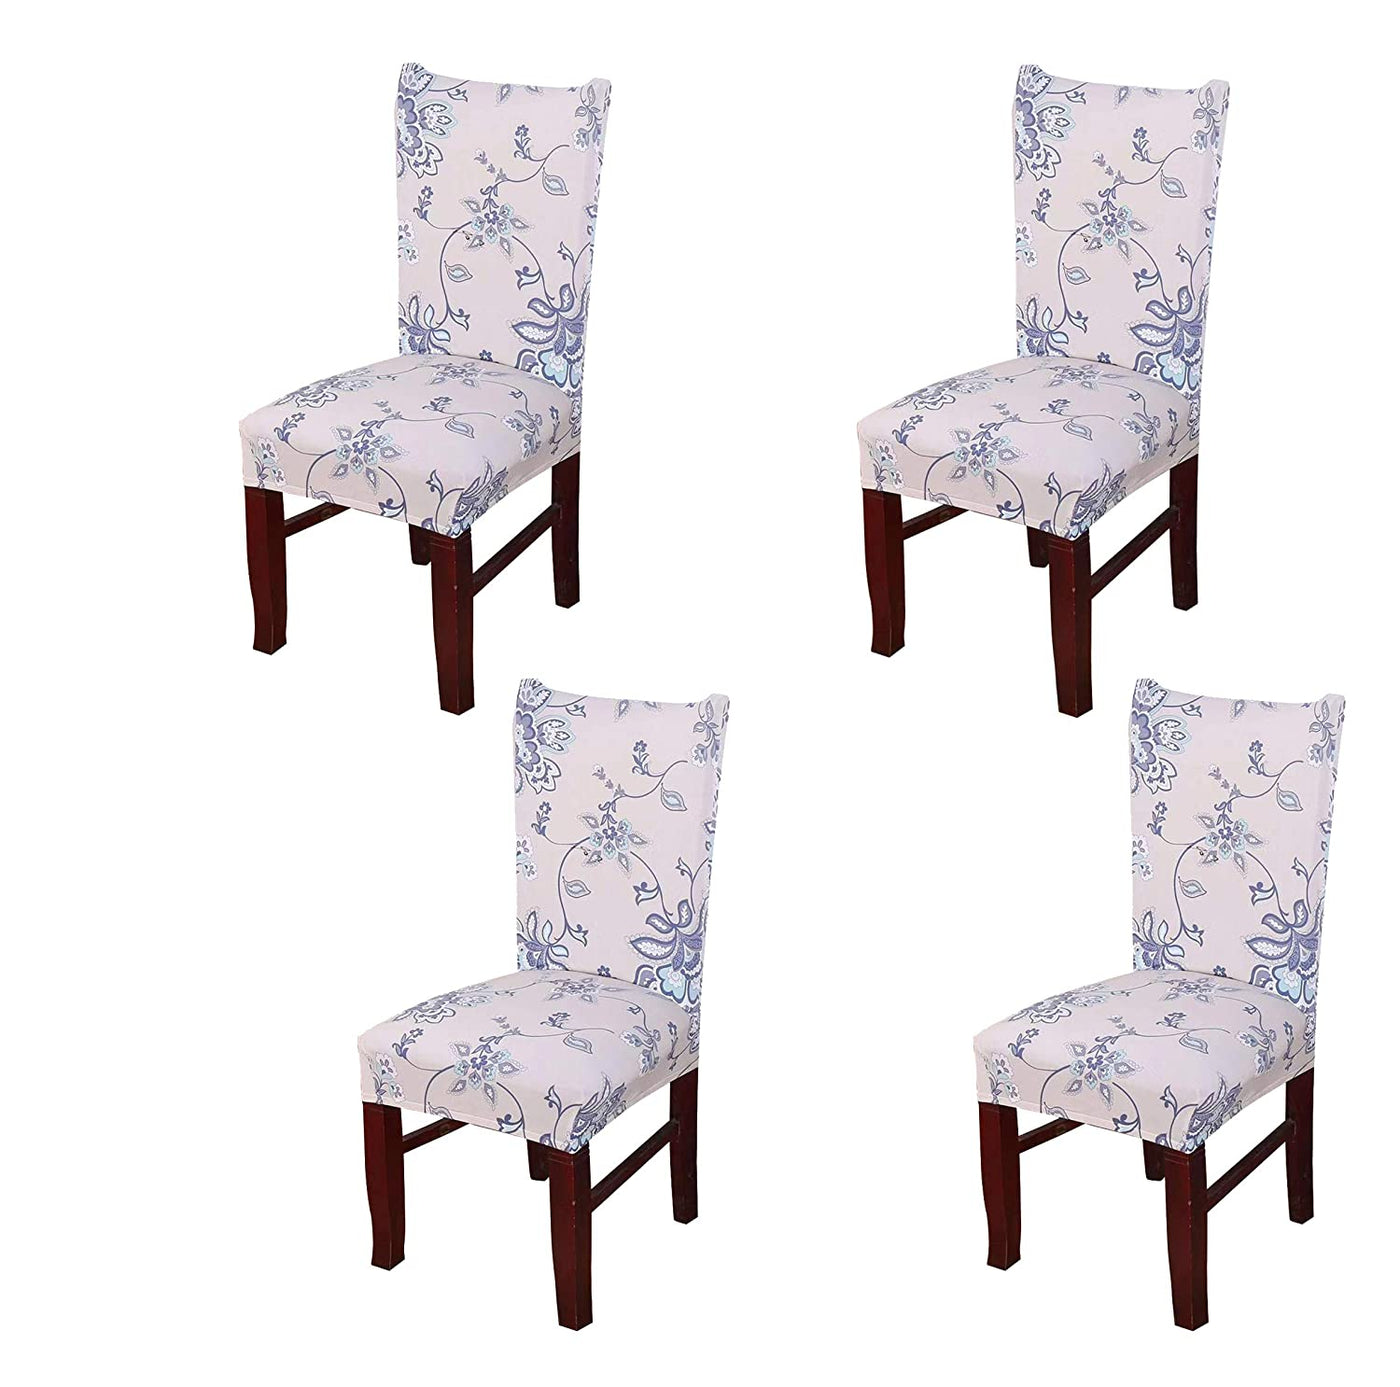 Printed Elastic Chair Cover - Beige/Blue Flower